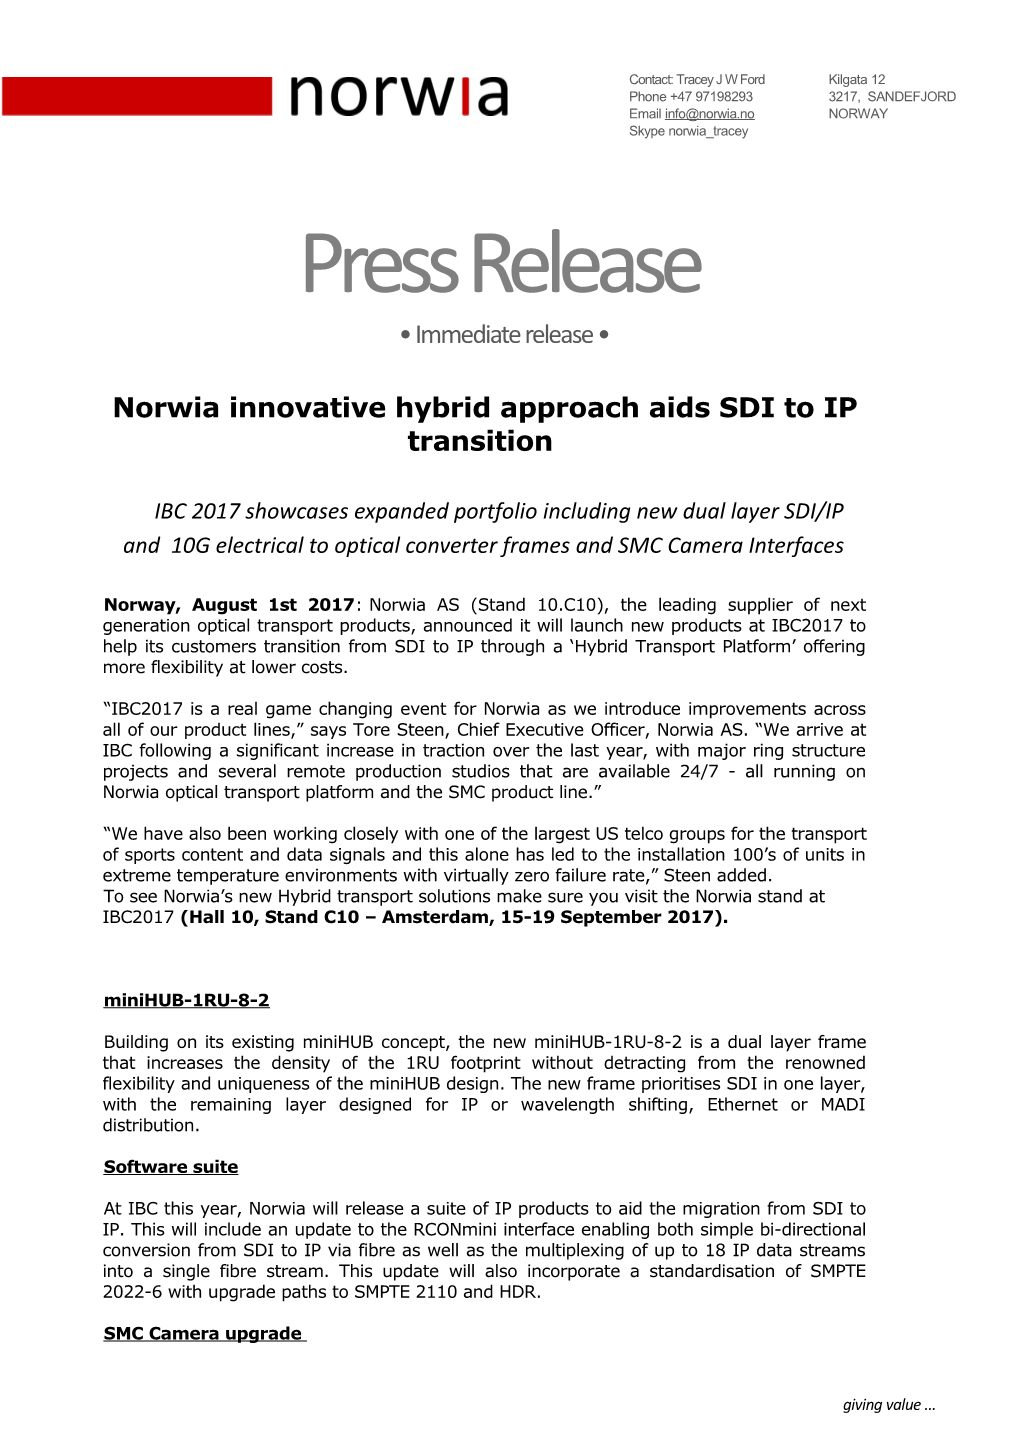 Norwia Innovative Hybrid Approach Aids SDI to IP Transition